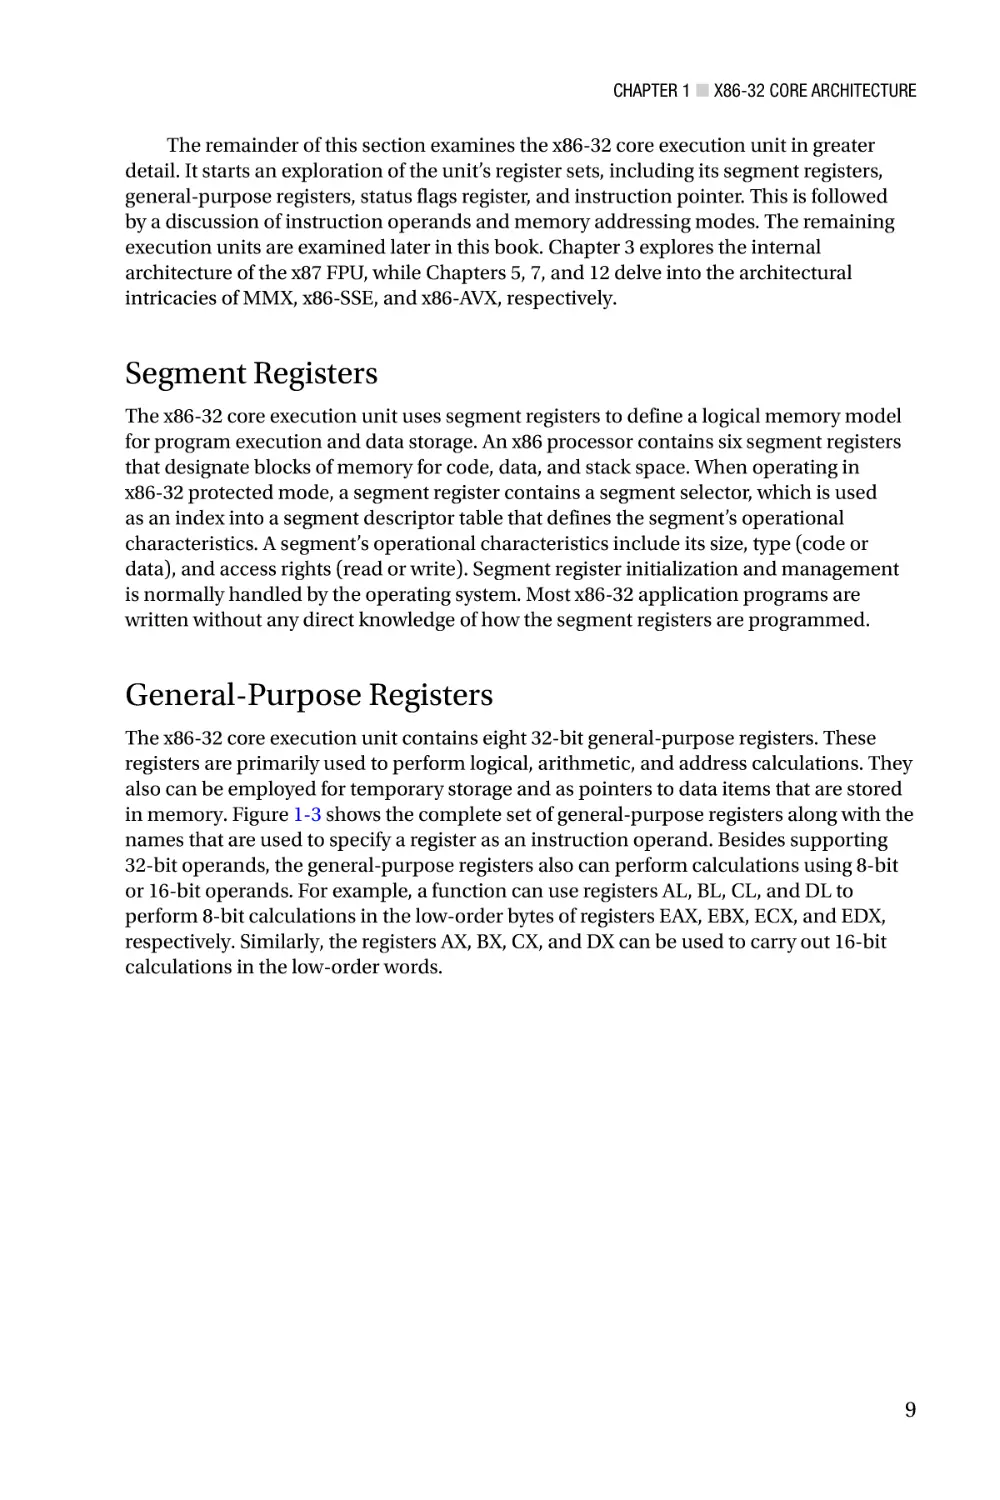 Segment Registers
General-Purpose Registers